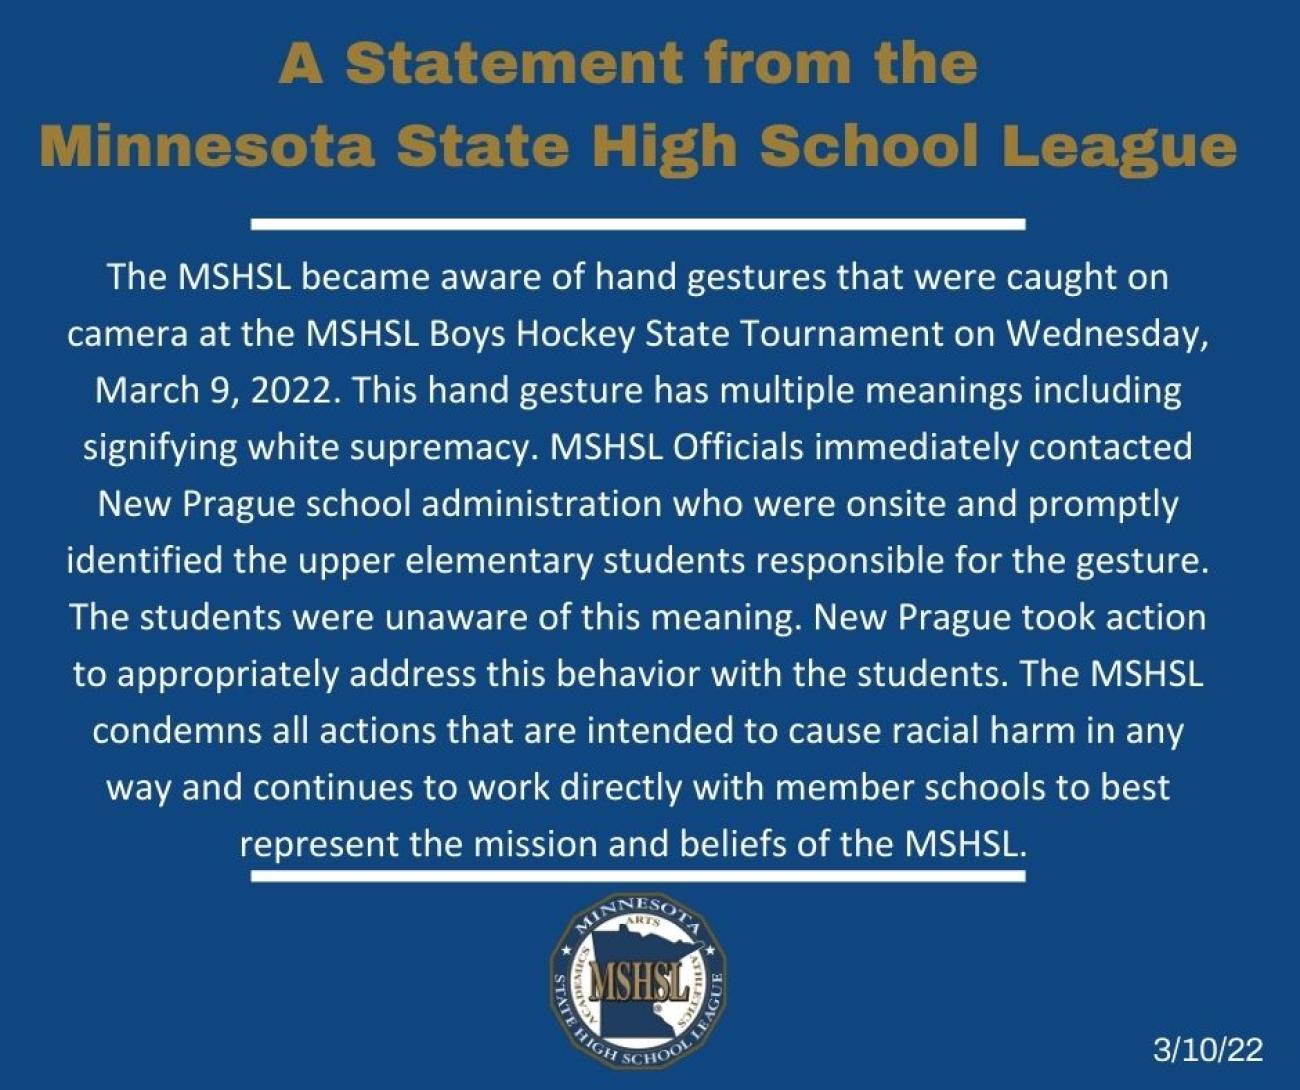 Statement from MSHSL